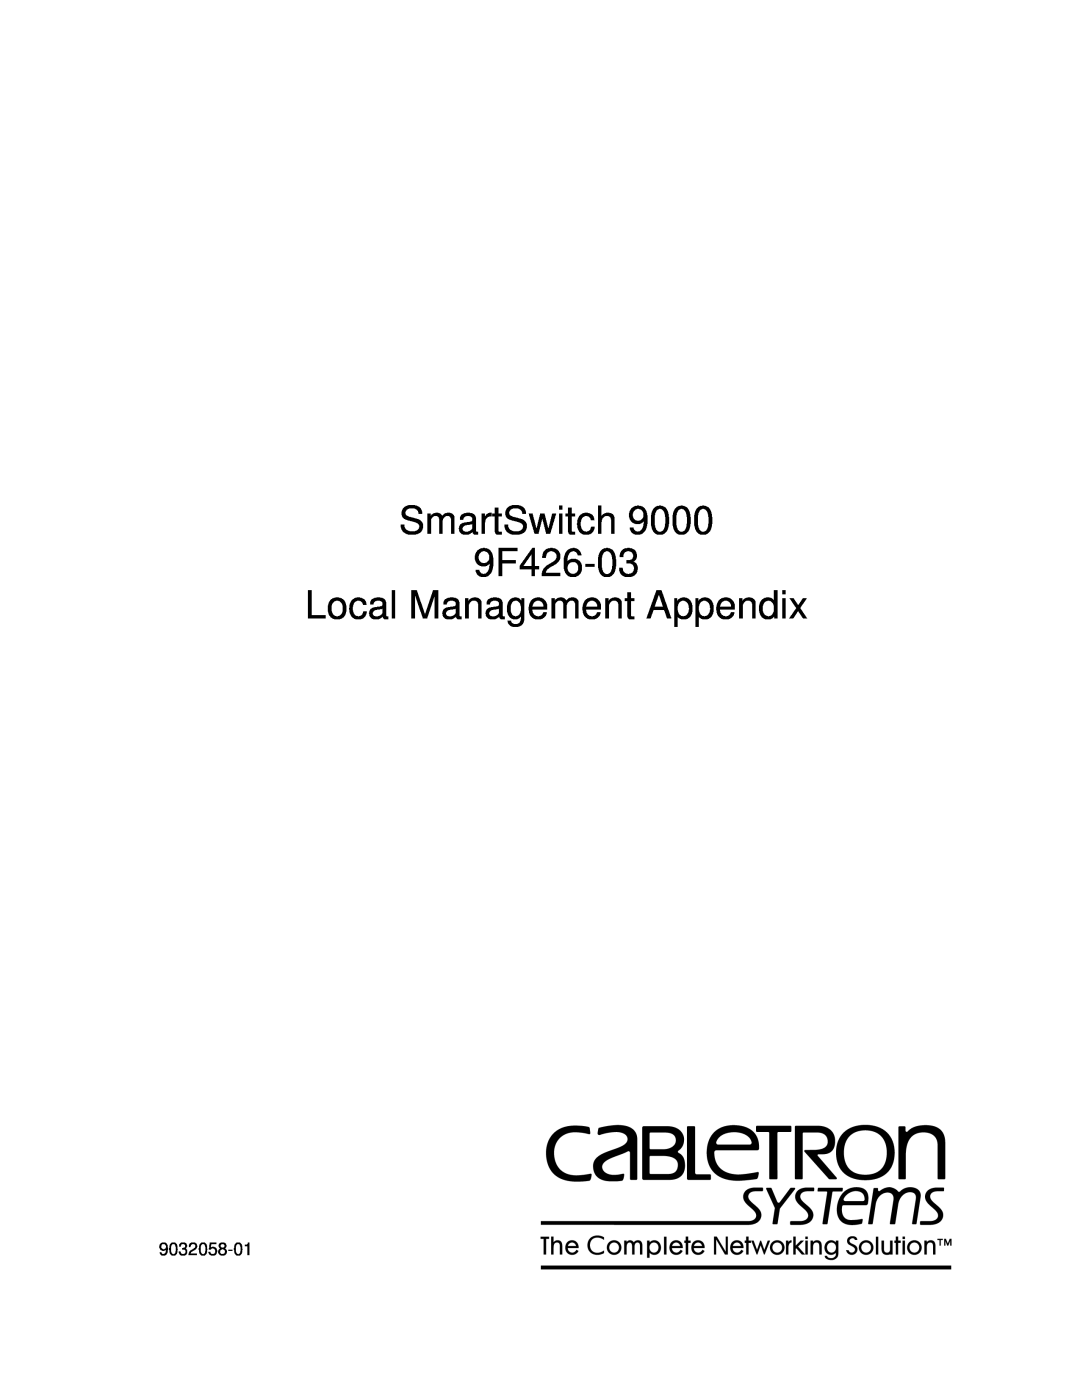 Cabletron Systems appendix SmartSwitch 9F426-03 Local Management Appendix, 9032058-01 